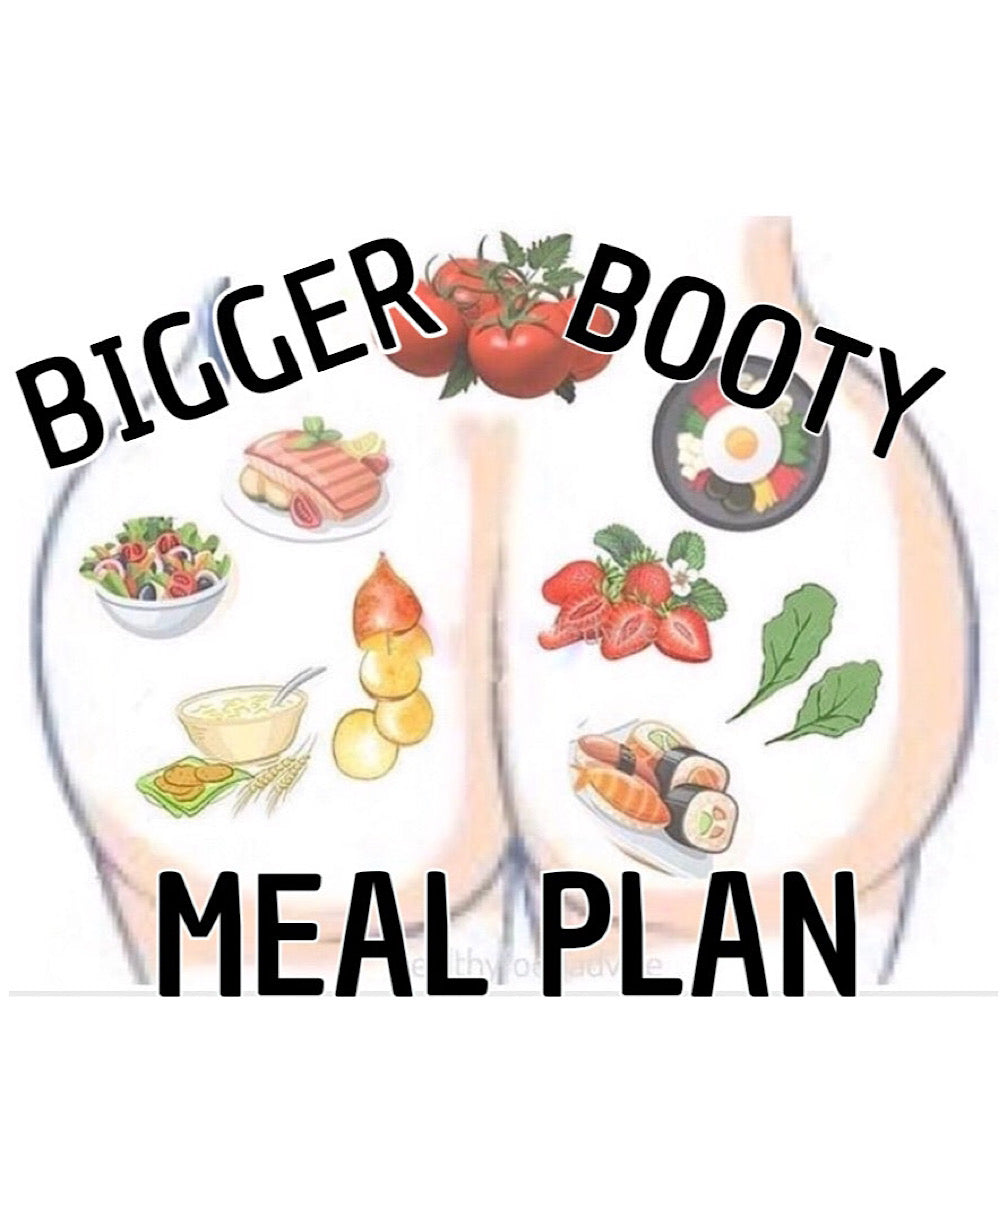 Bigger Booty Meal Plan